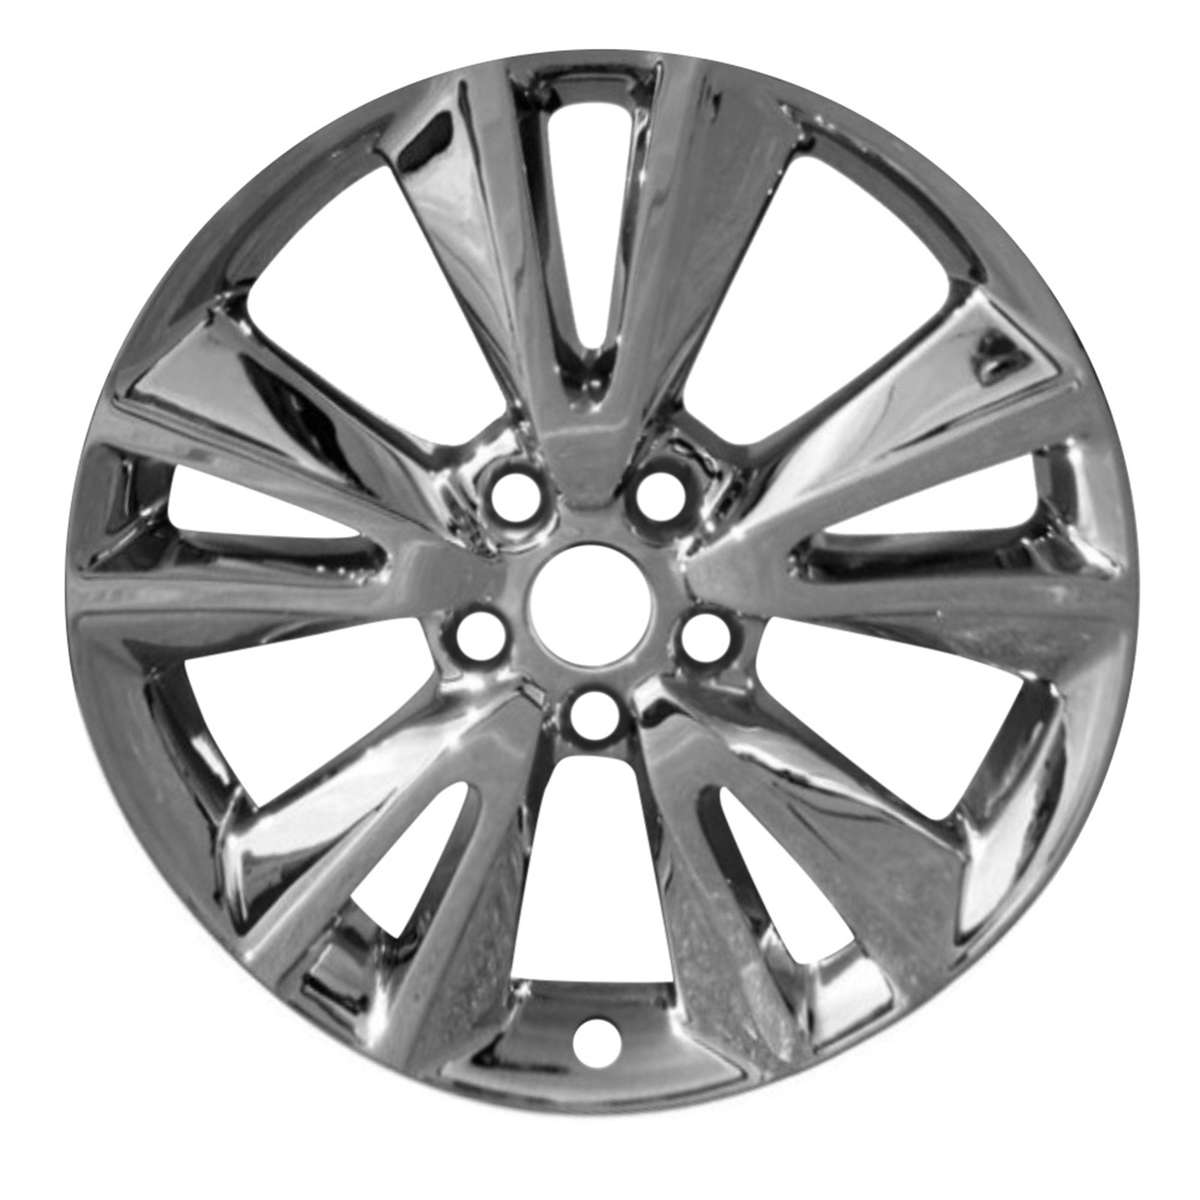 2014 Dodge Durango 20" OEM Wheel Rim W2393LPVD